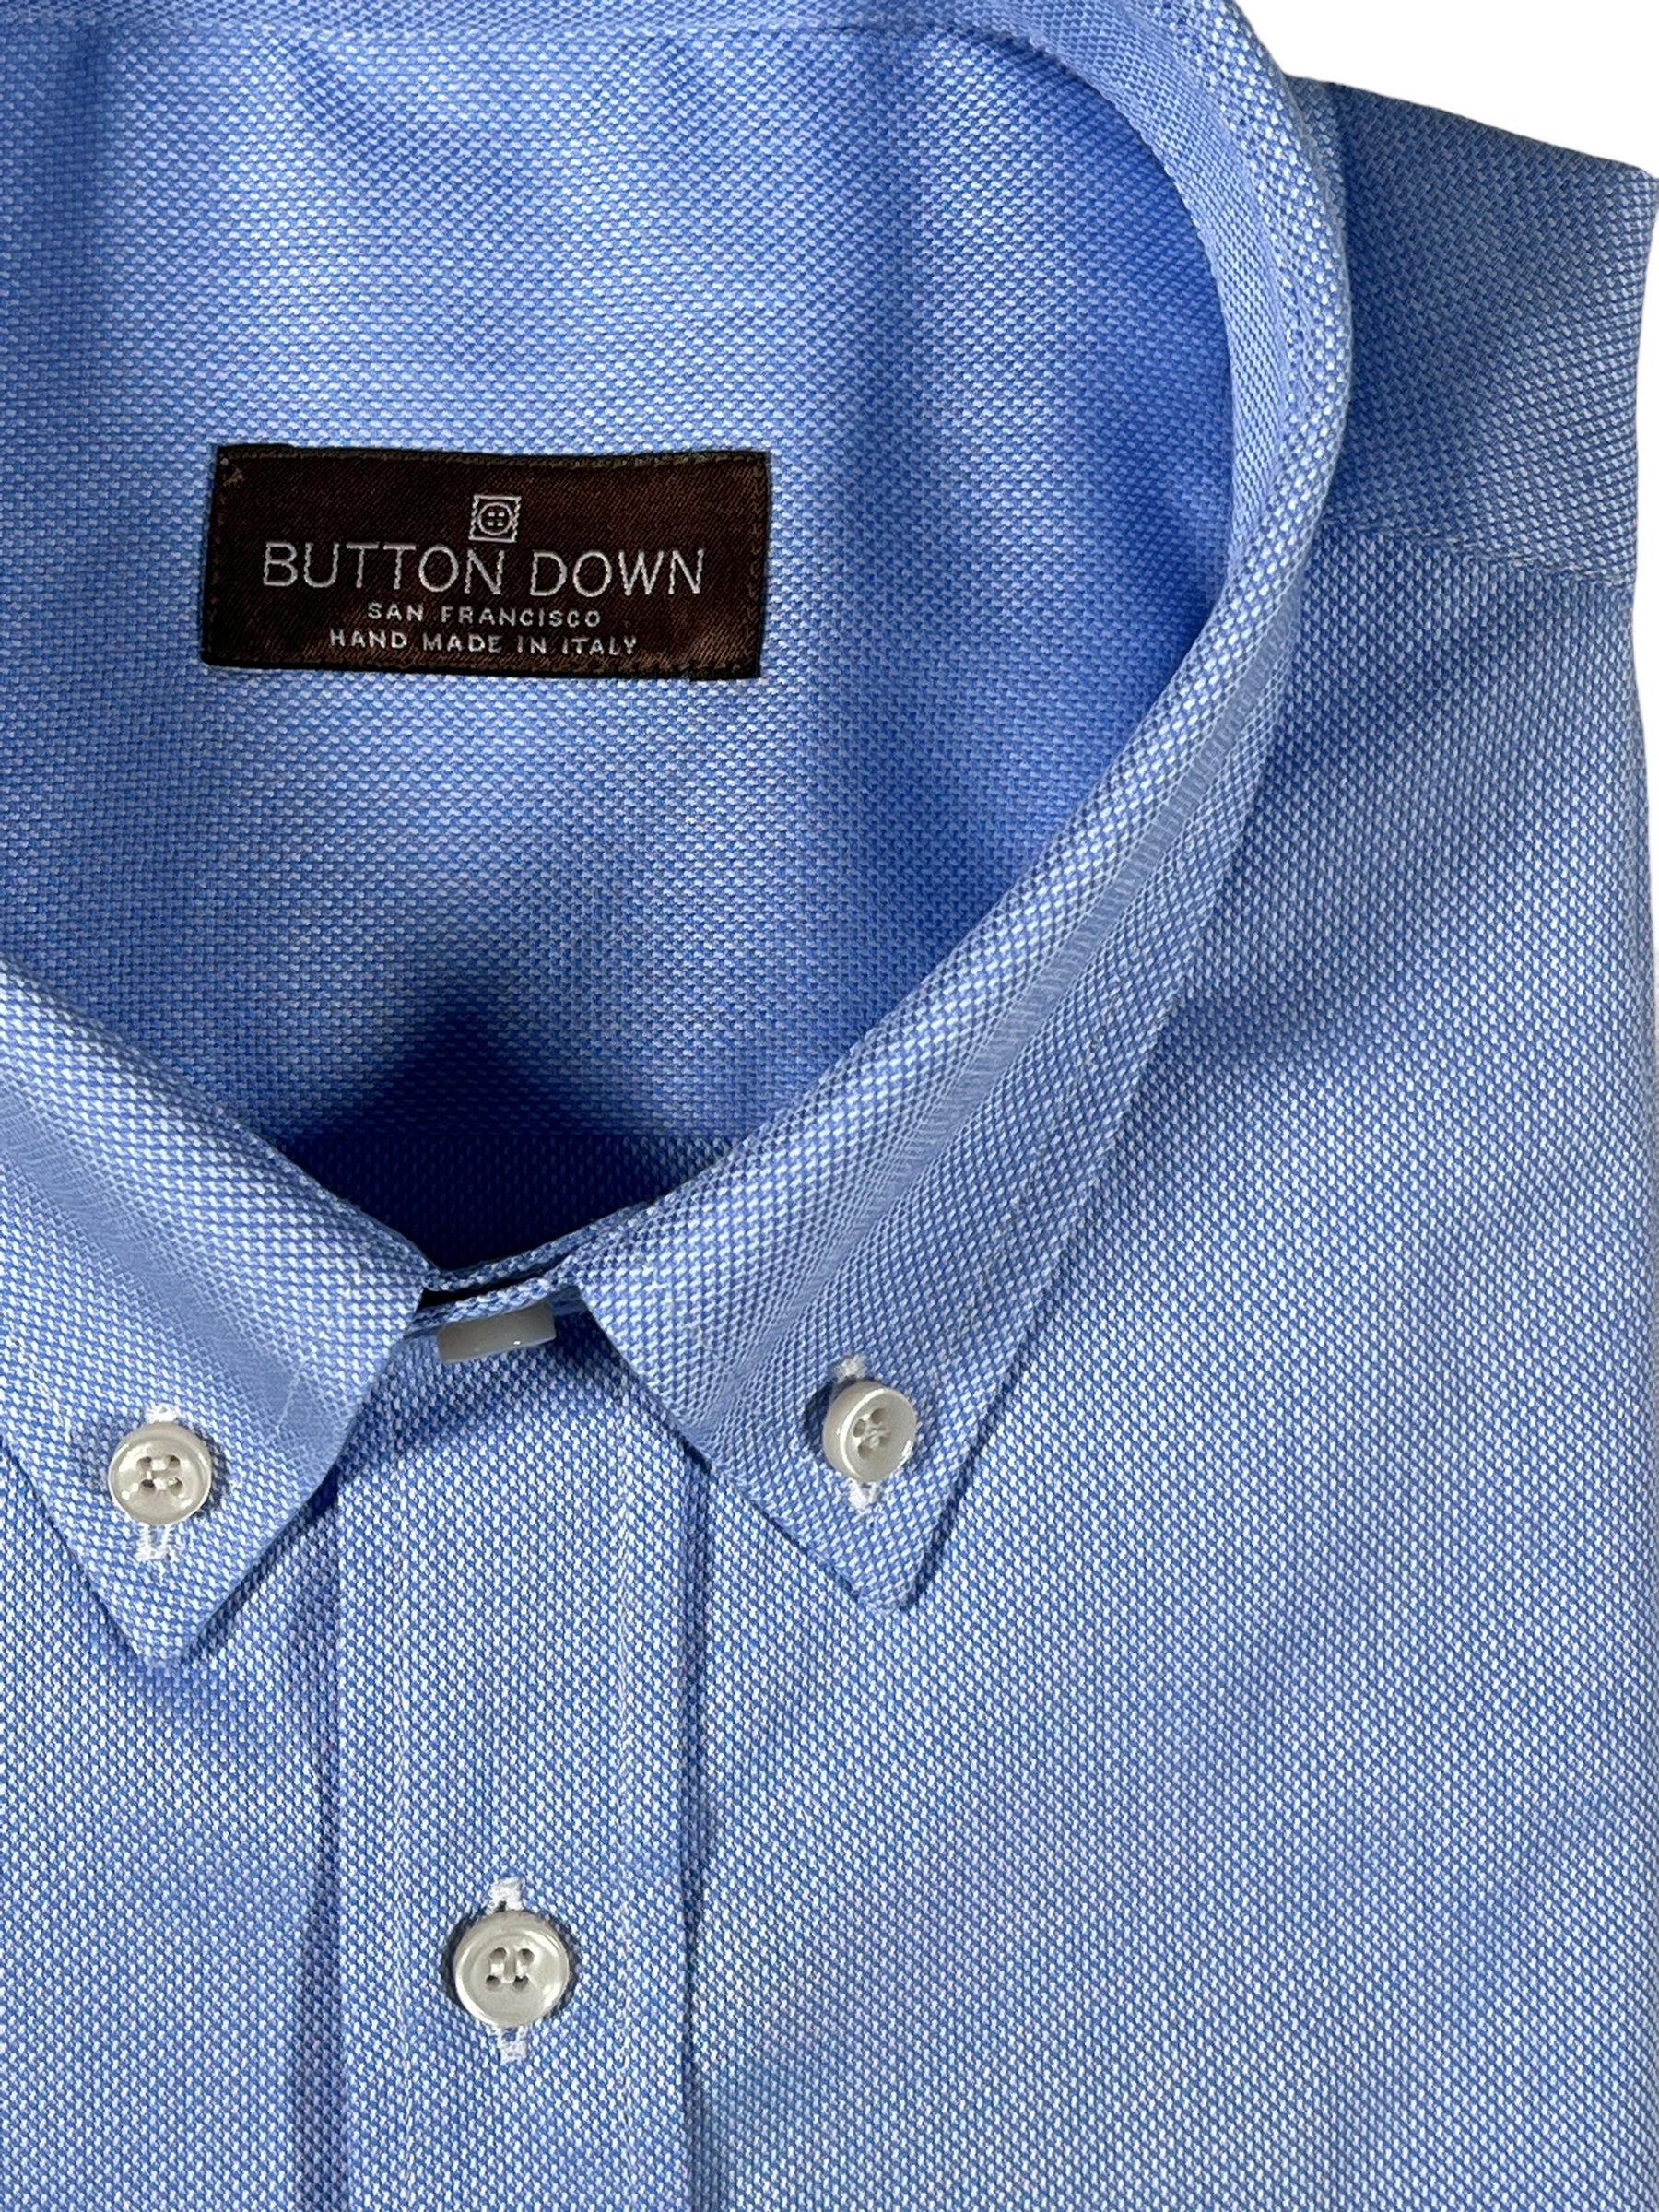 BUTTON DOWN SPORT SHIRT - SOLID BLUE